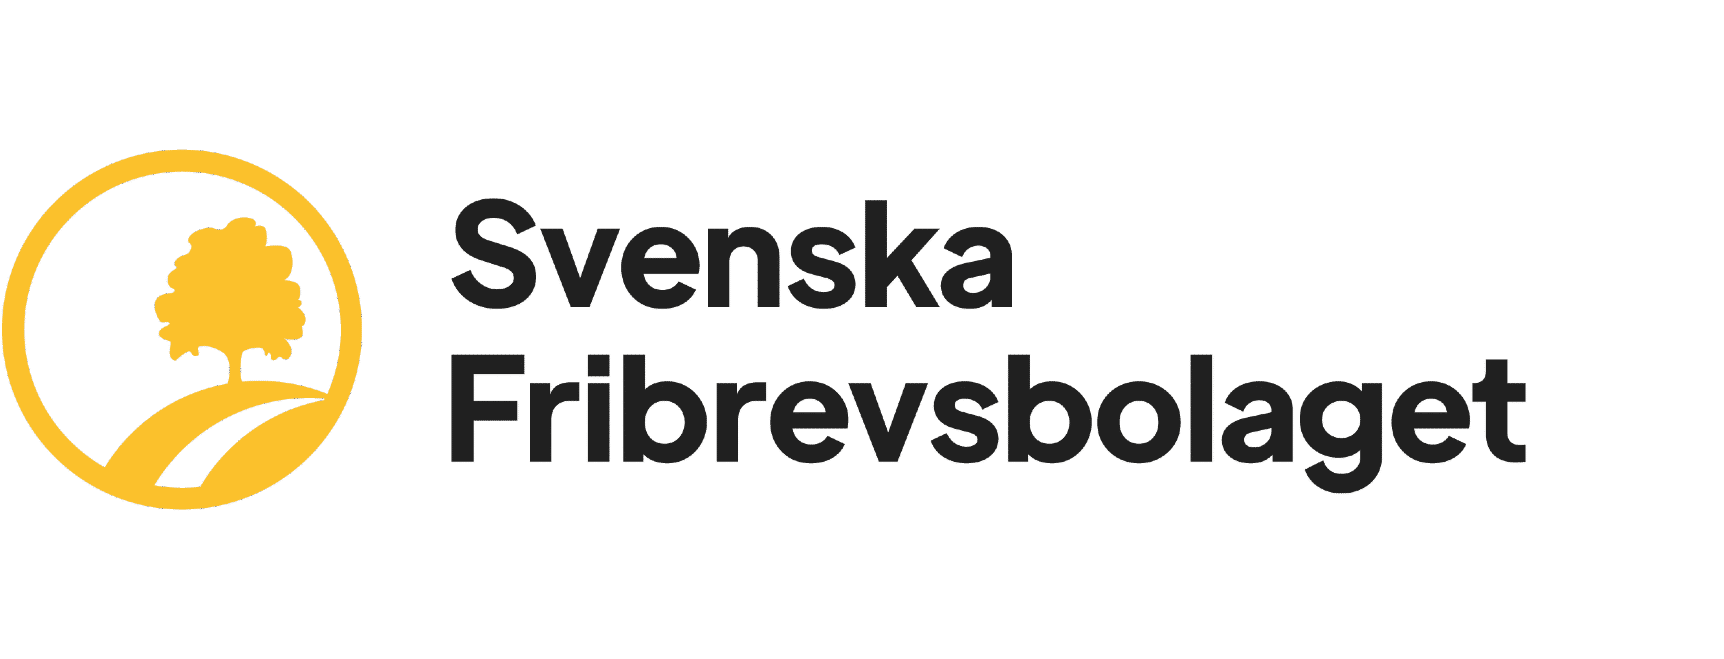 Svenska Fribrevsbolagets logo